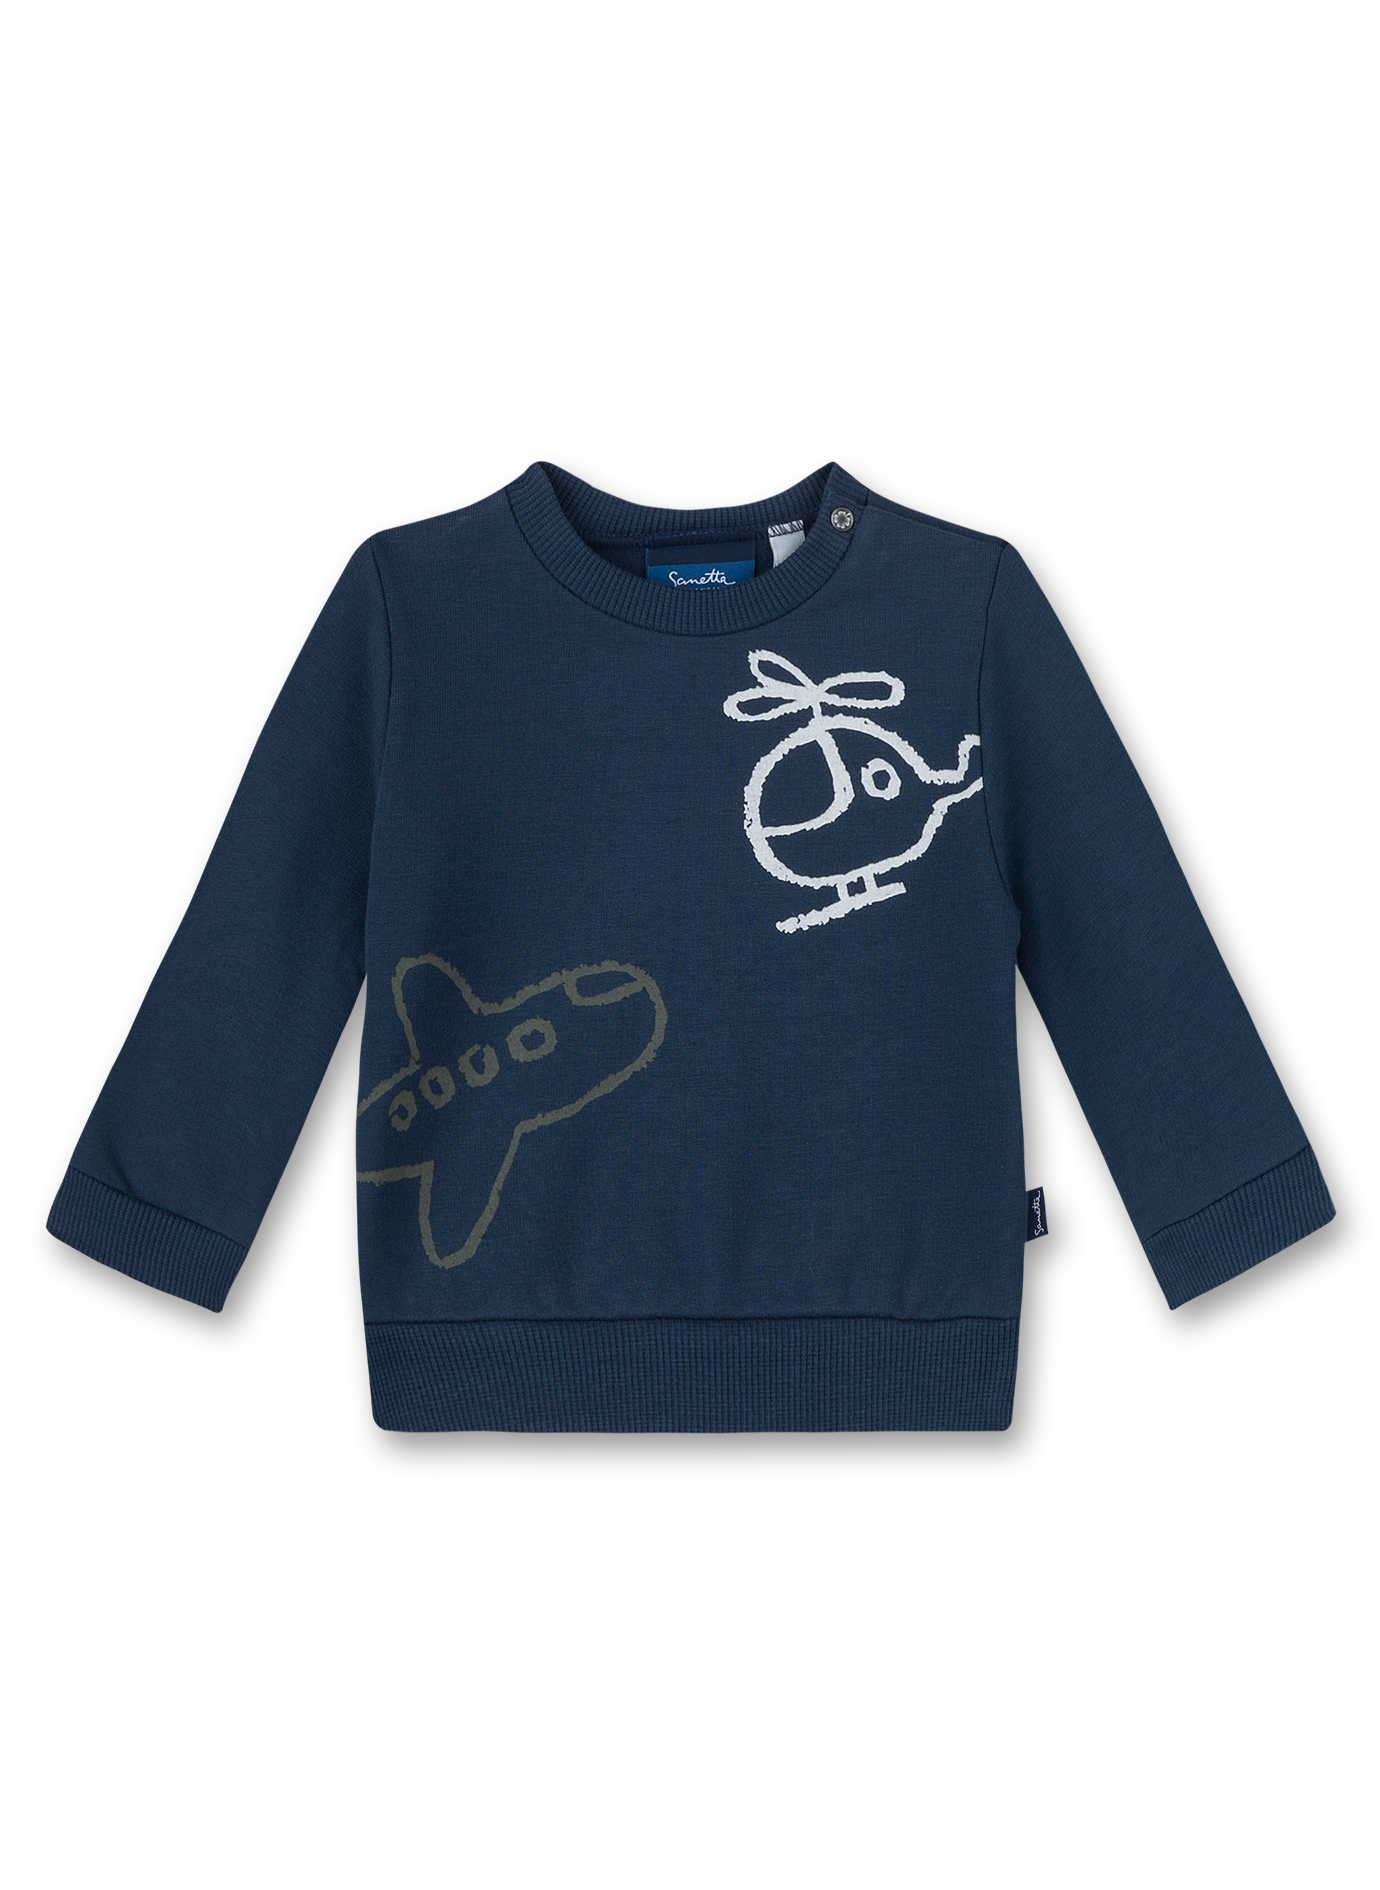 Jungen-Sweatshirt Blau Let's fly